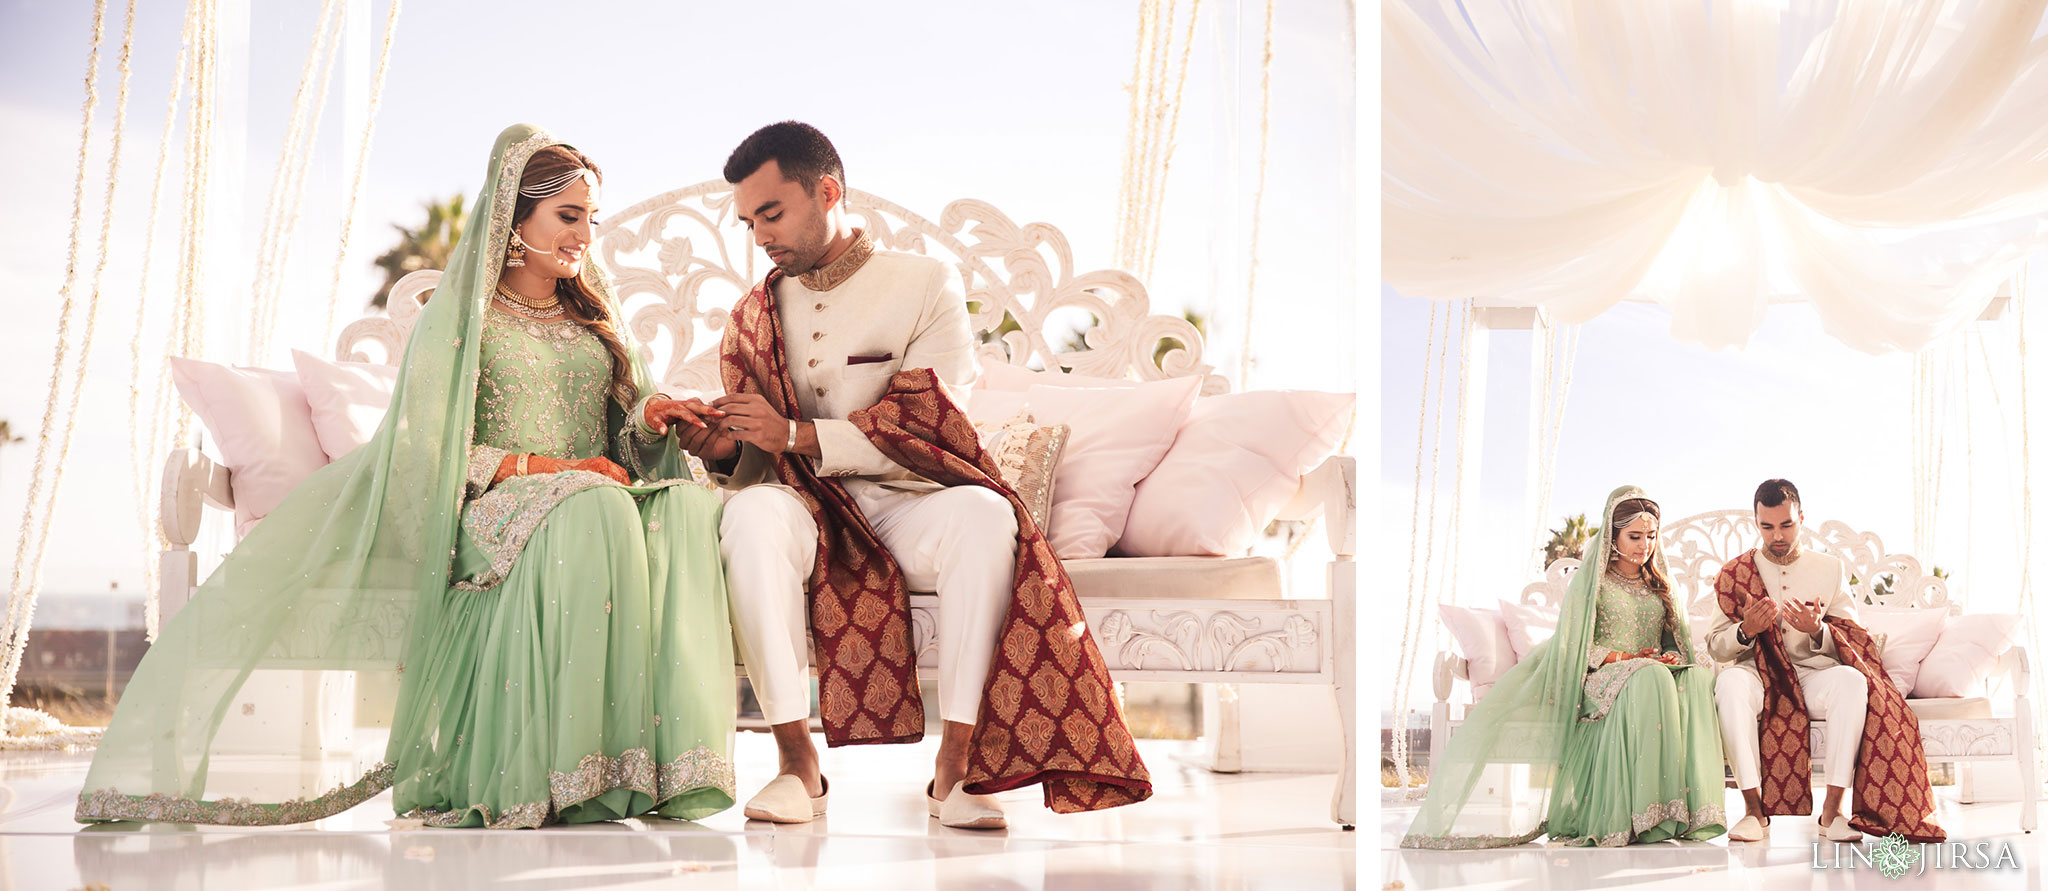 023 pasea hotel huntington beach pakistani wedding ceremony photography